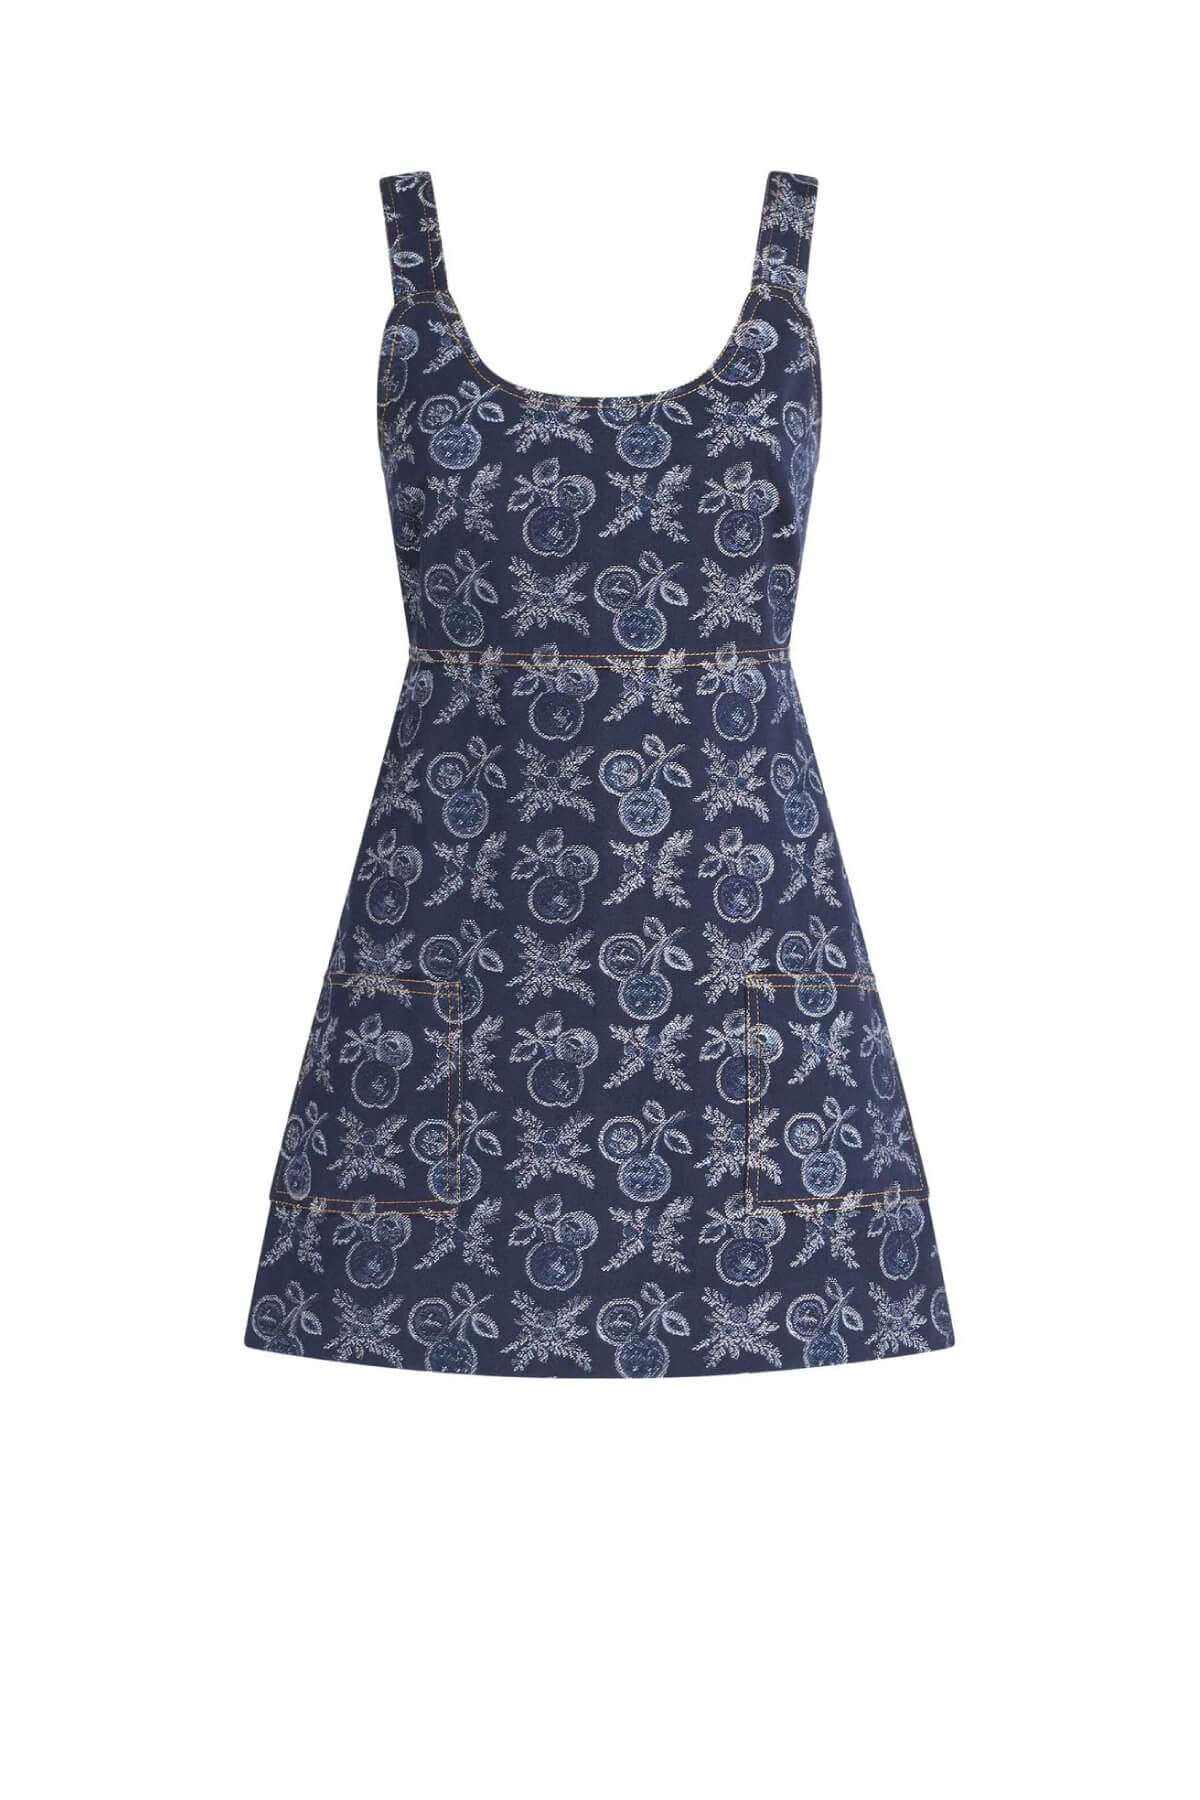 Etro Cherry Jacquard Denim Mini Dress - Navy Blue